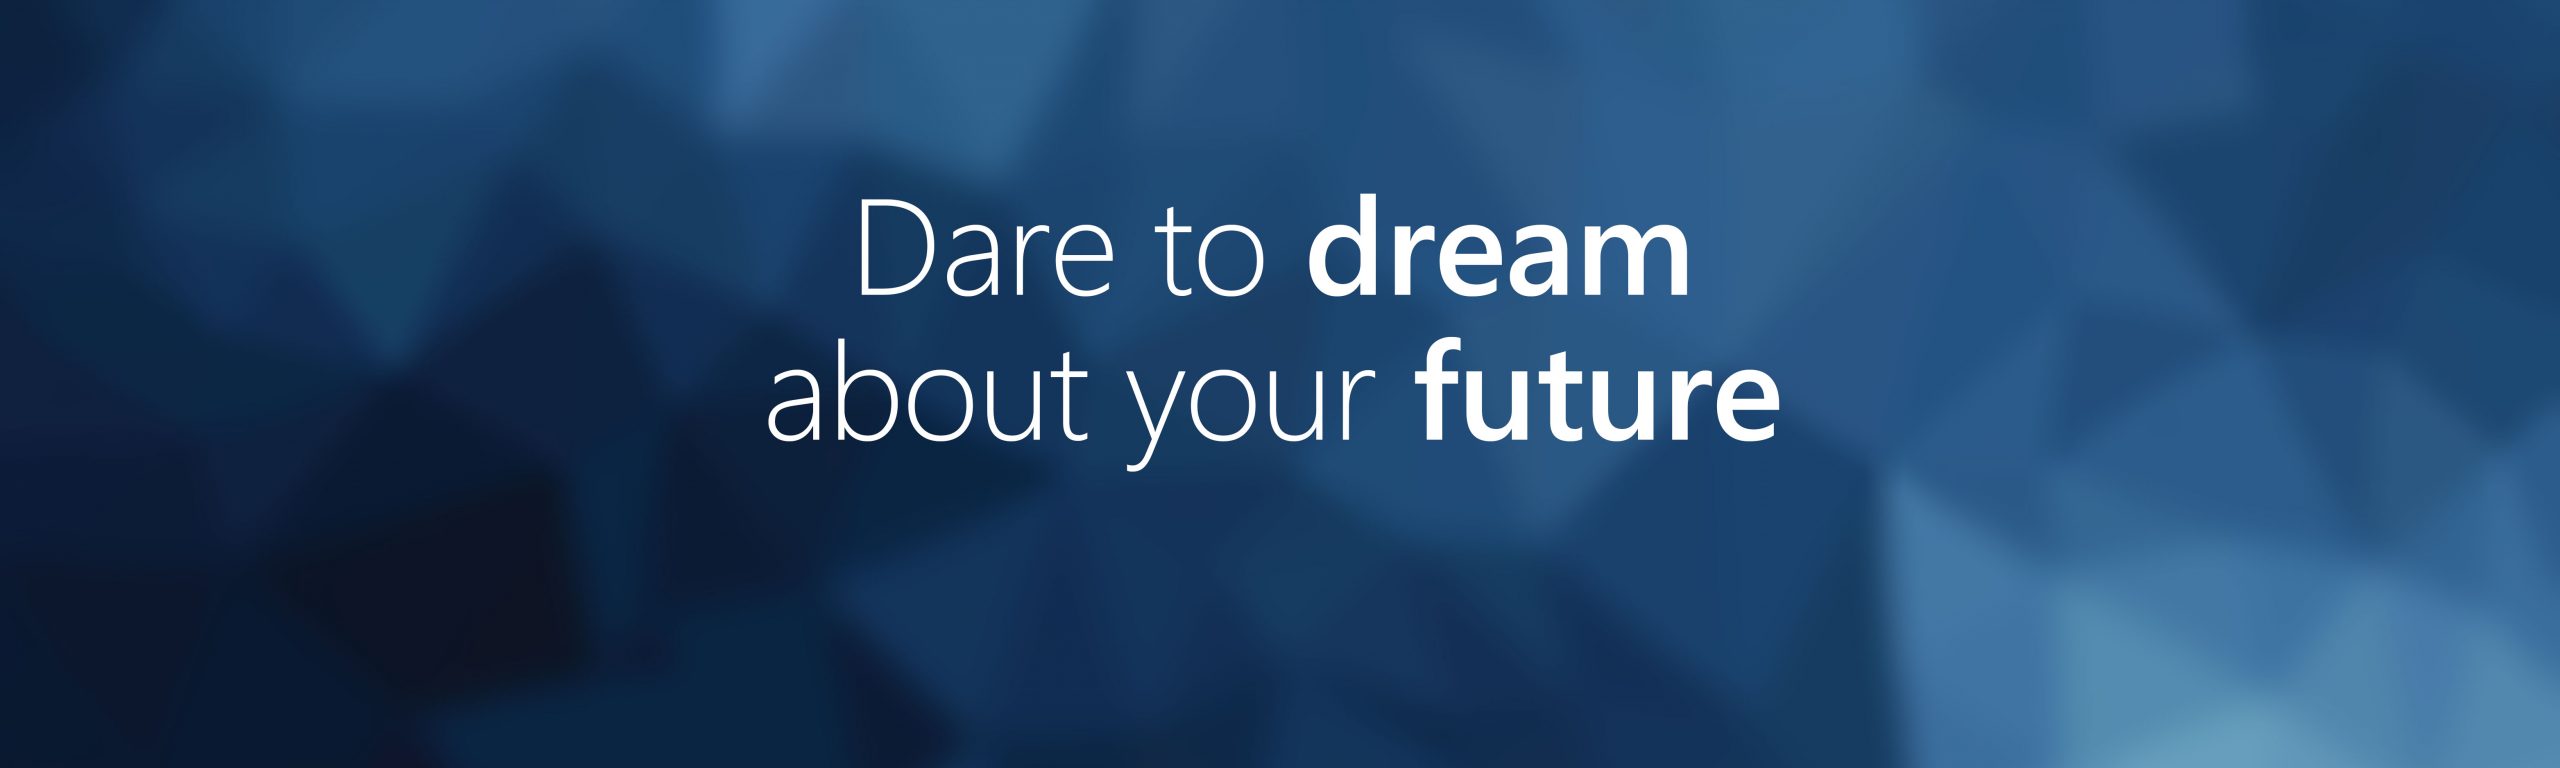 Dare to dream about your future